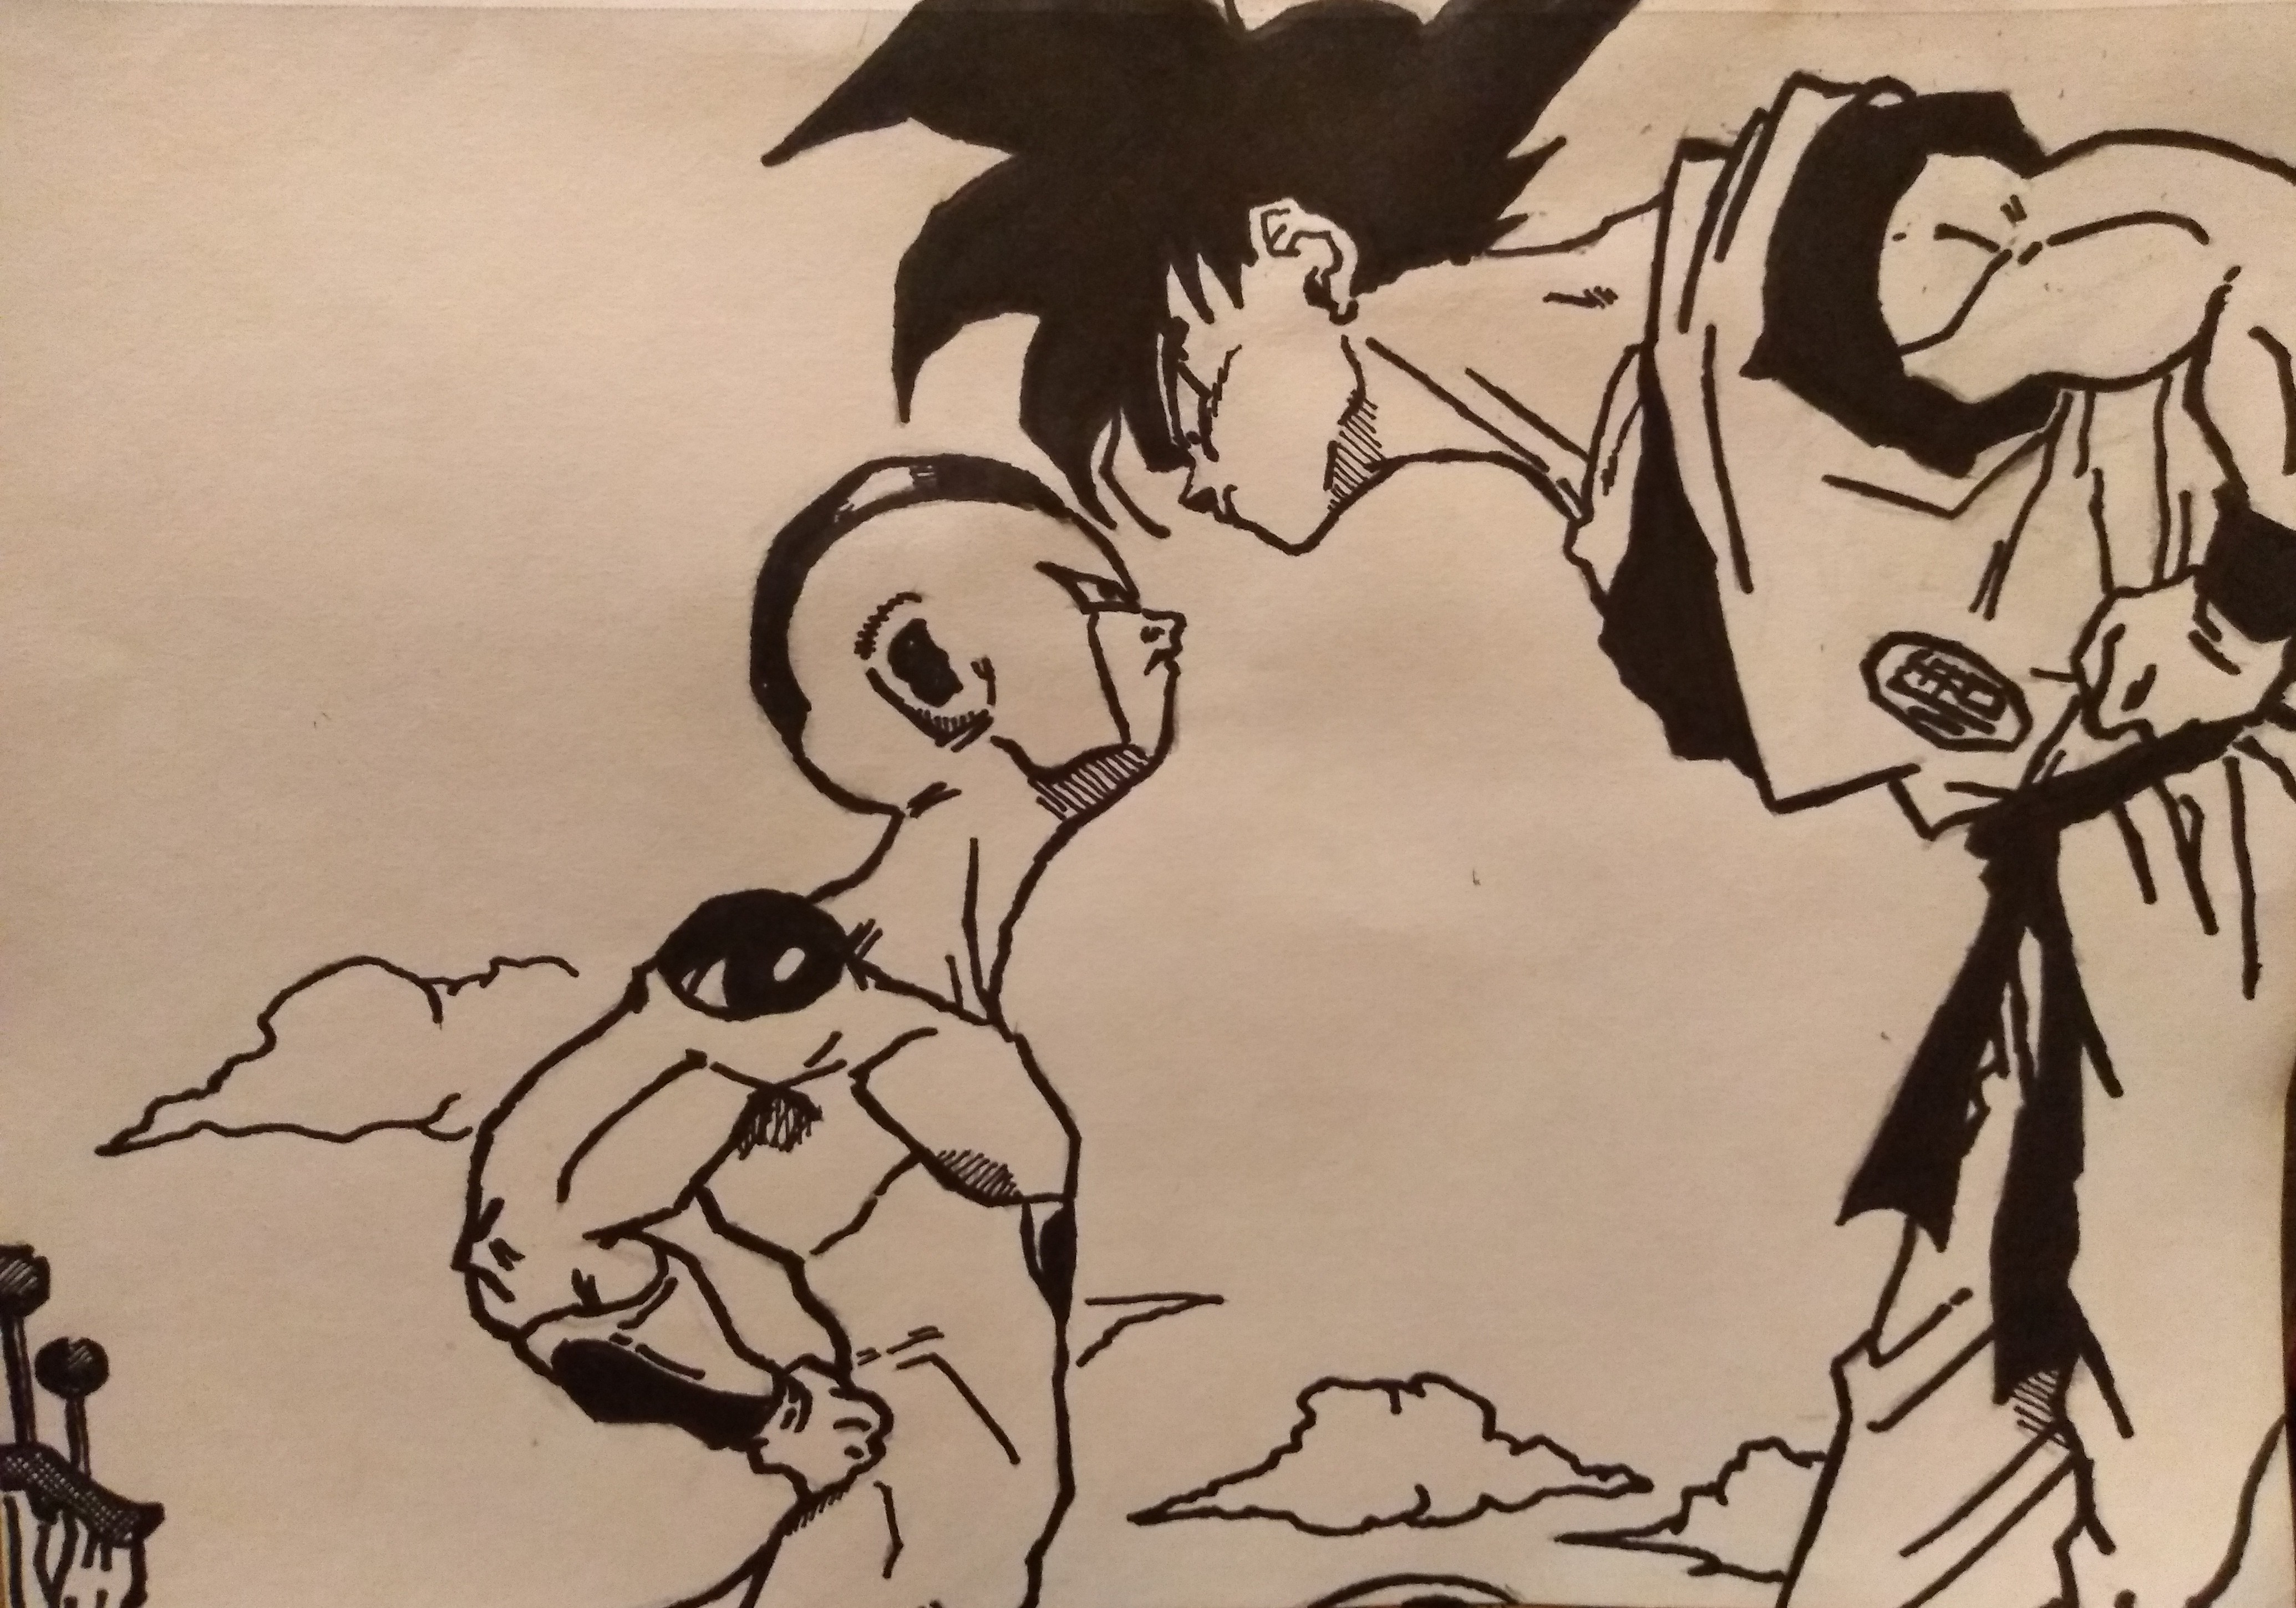 Goku vs Frieza staredown manga version. by itachiofthecrow on DeviantArt